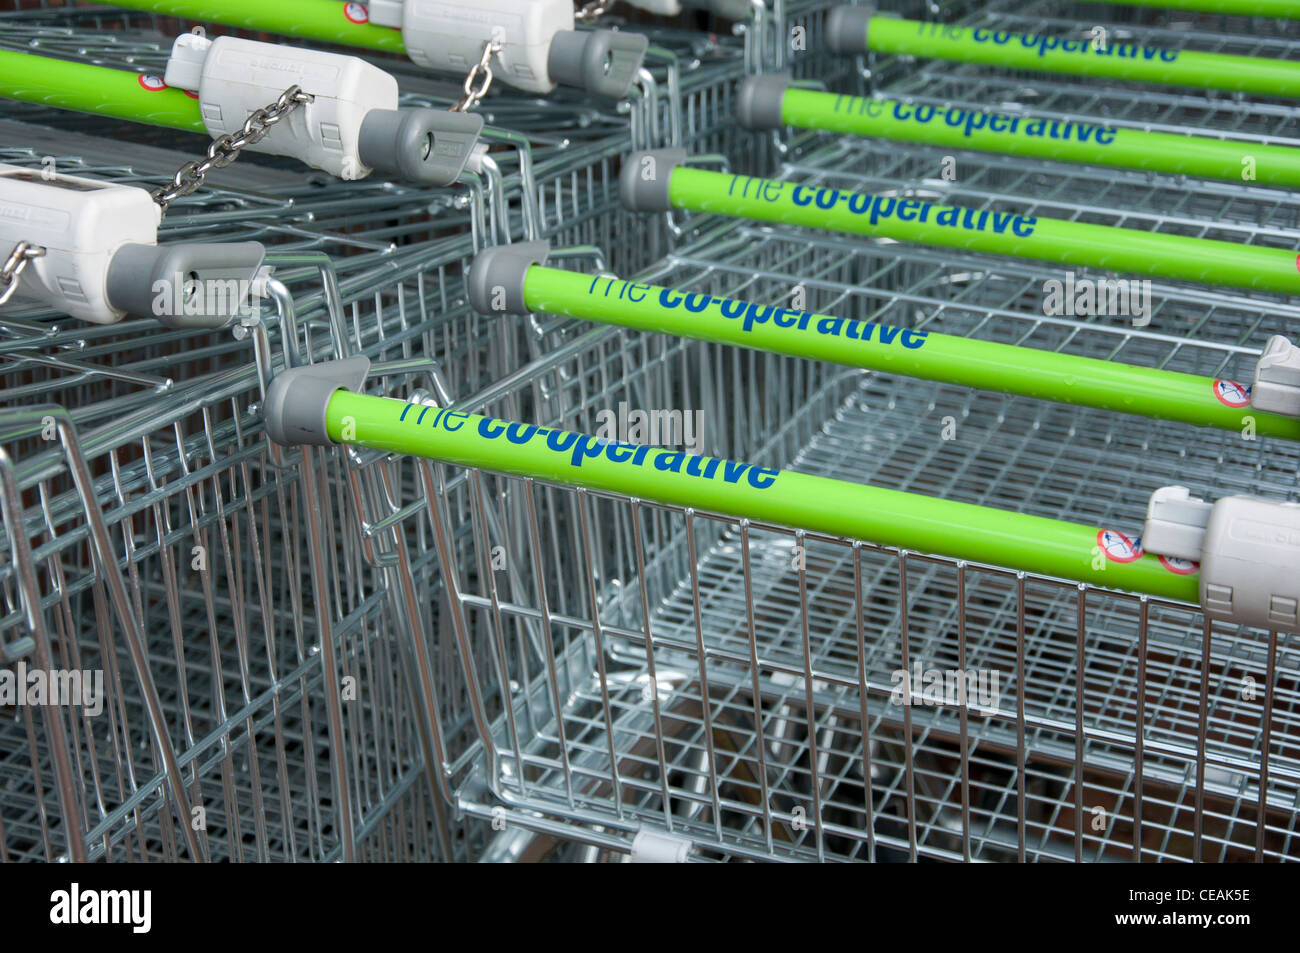 Co-operative supermarket trolleys. Stock Photo